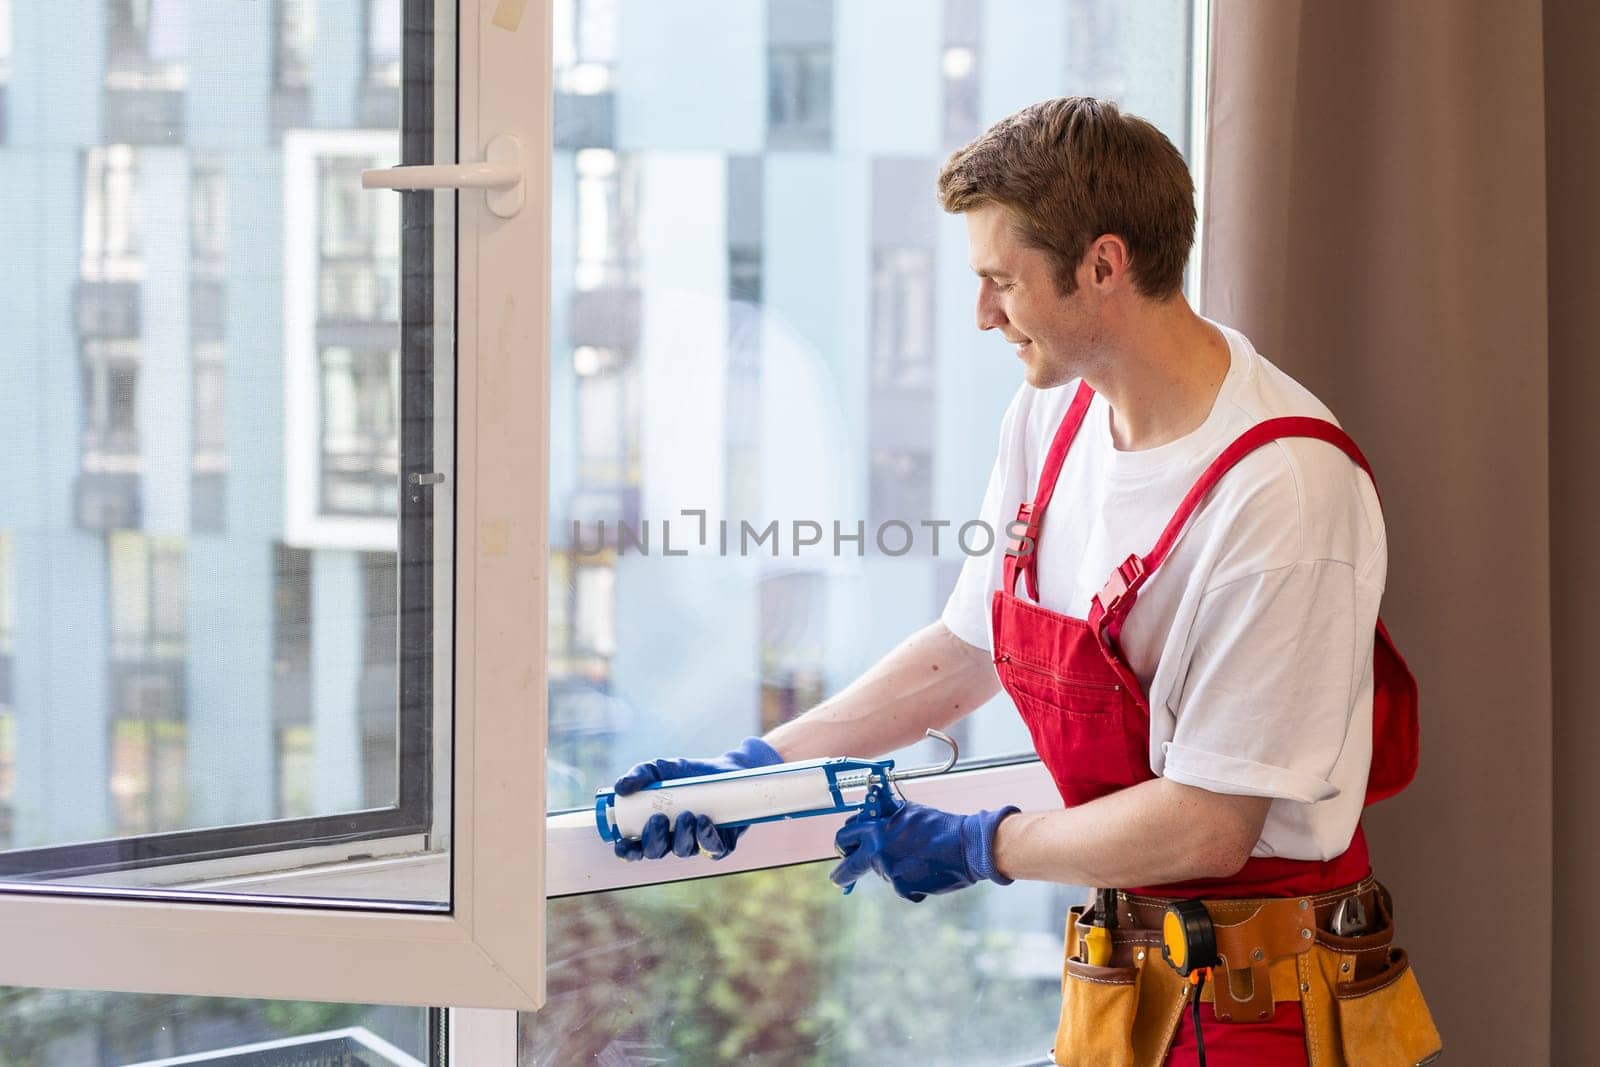 Worker installing plastic window indoors, closeup view by Andelov13